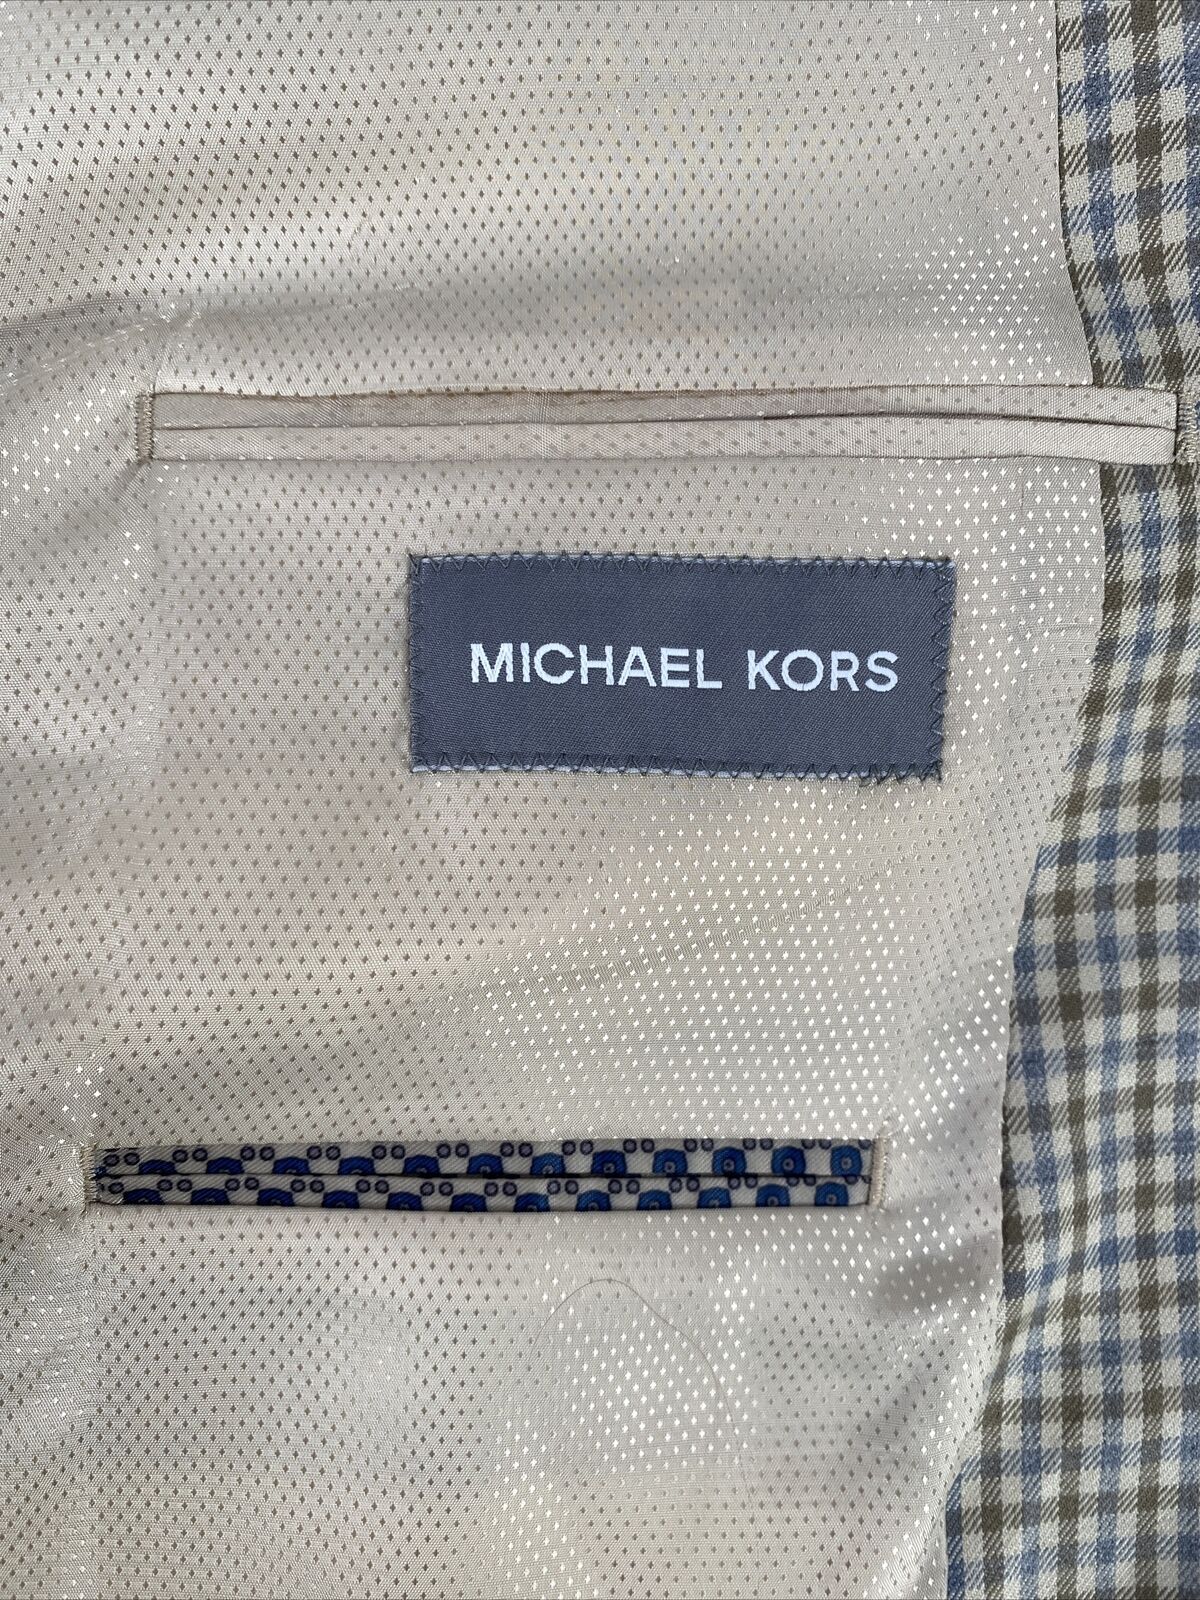 Michael Kors Men's Beige/Blue Long Sleeve 2 Button Blazer Sport Coat - 44